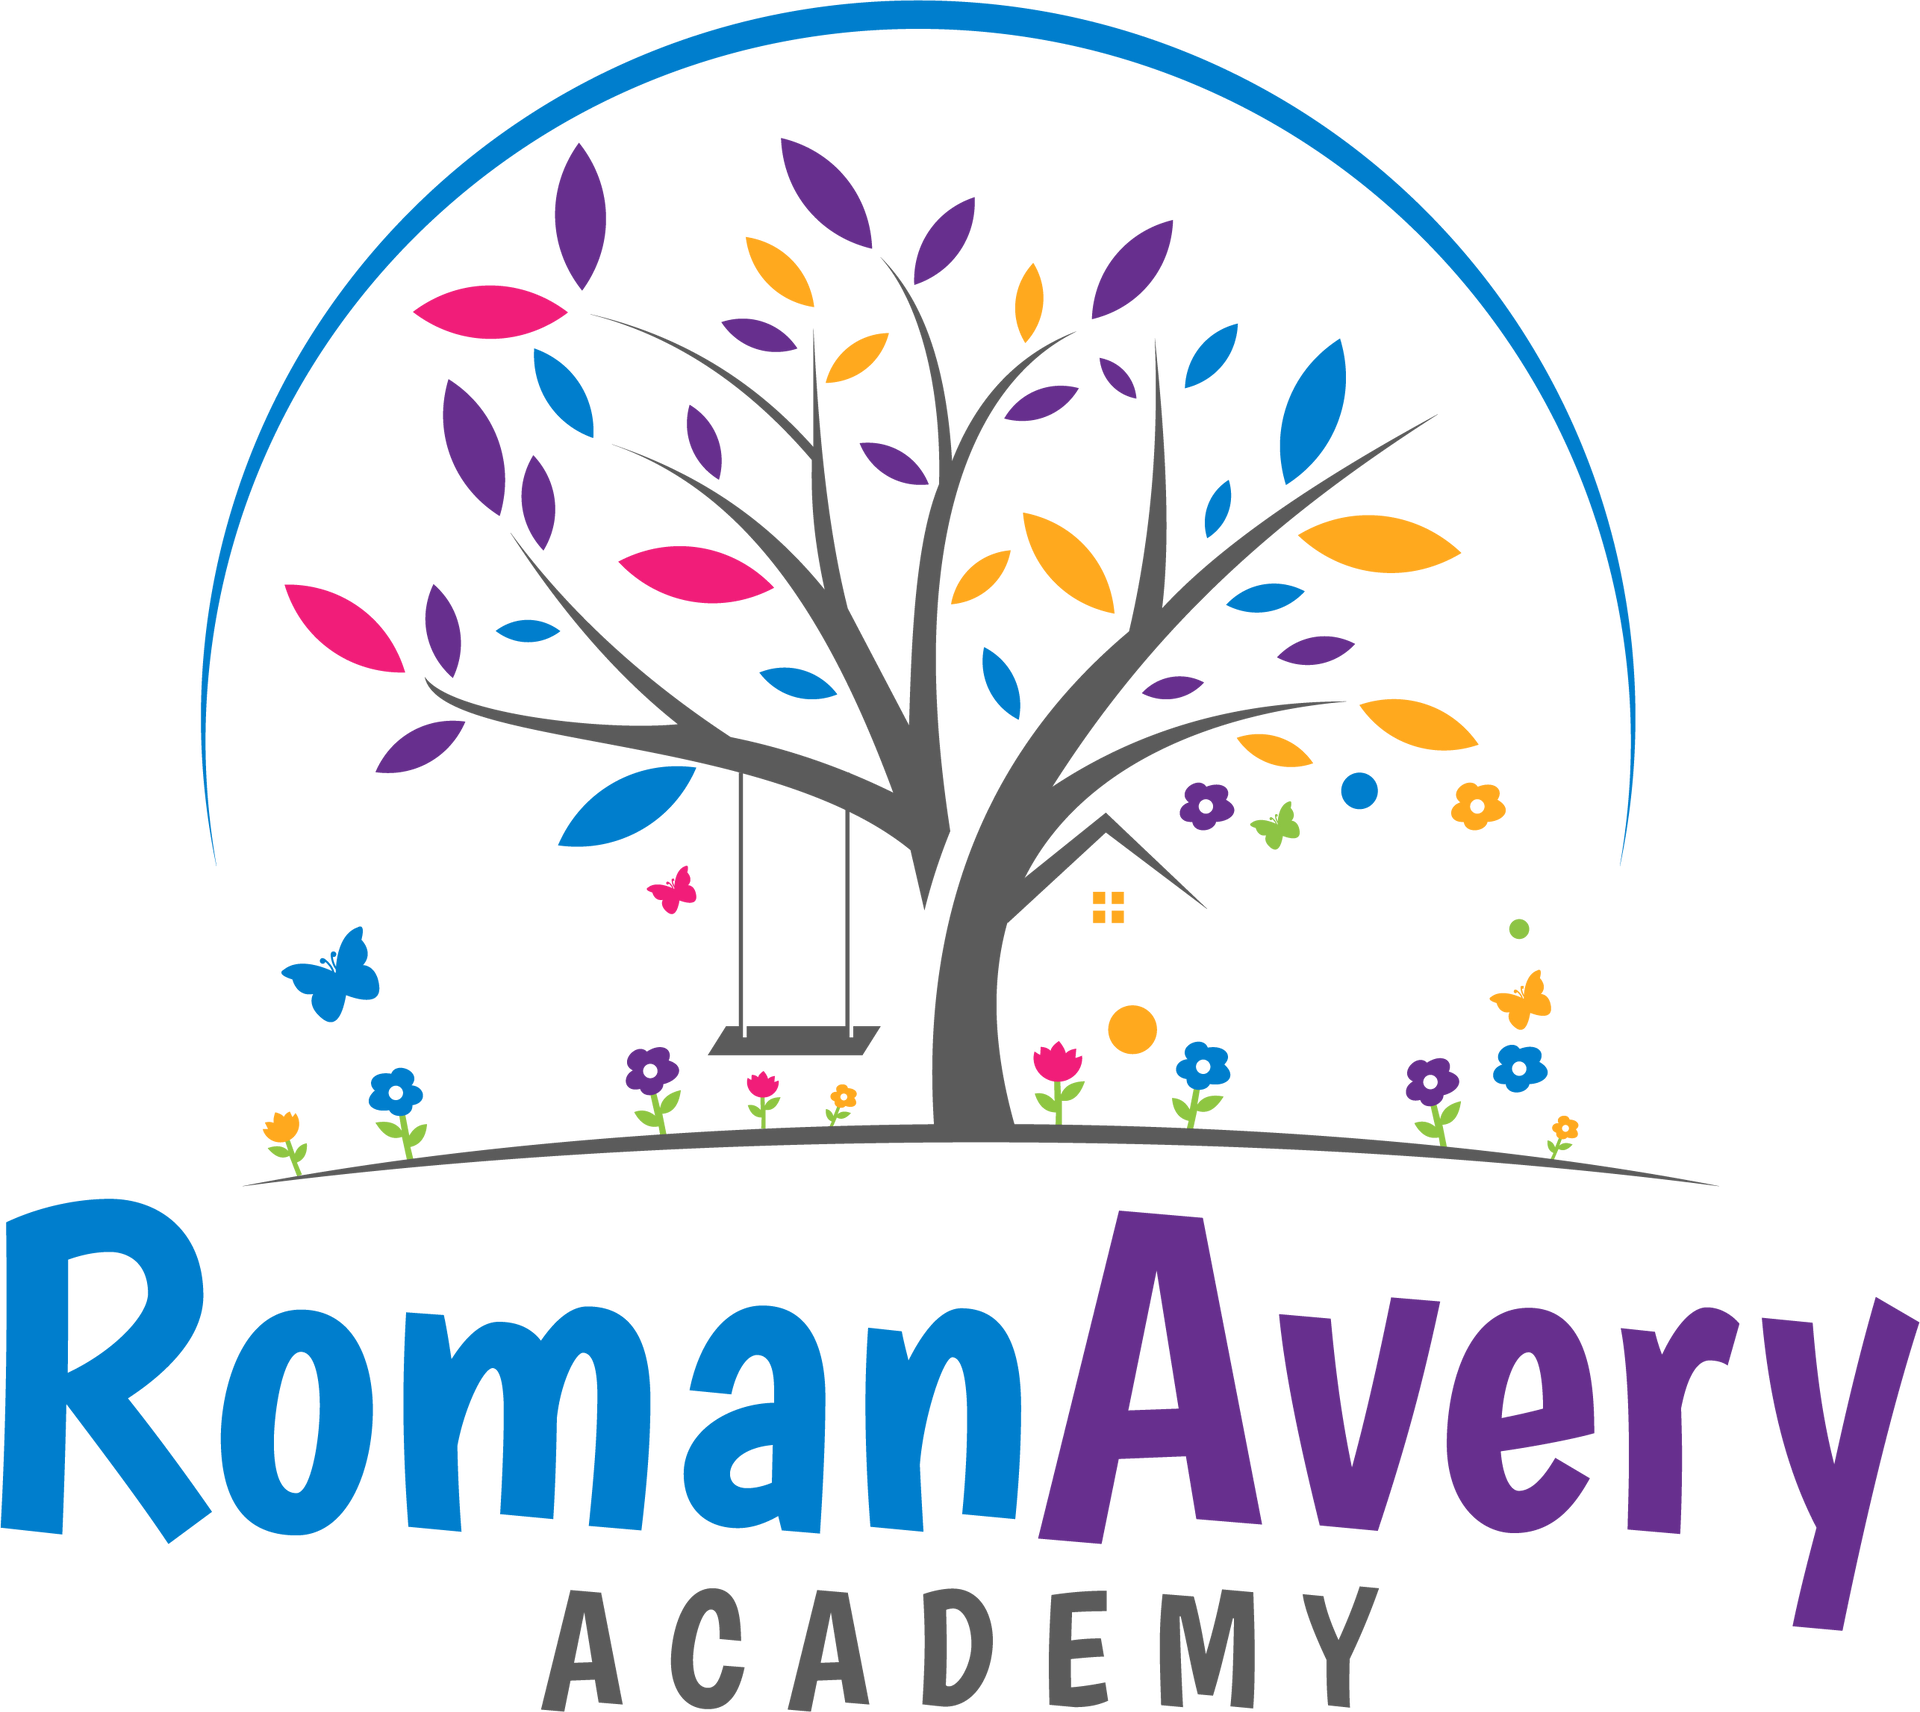 Roman Avery Academy